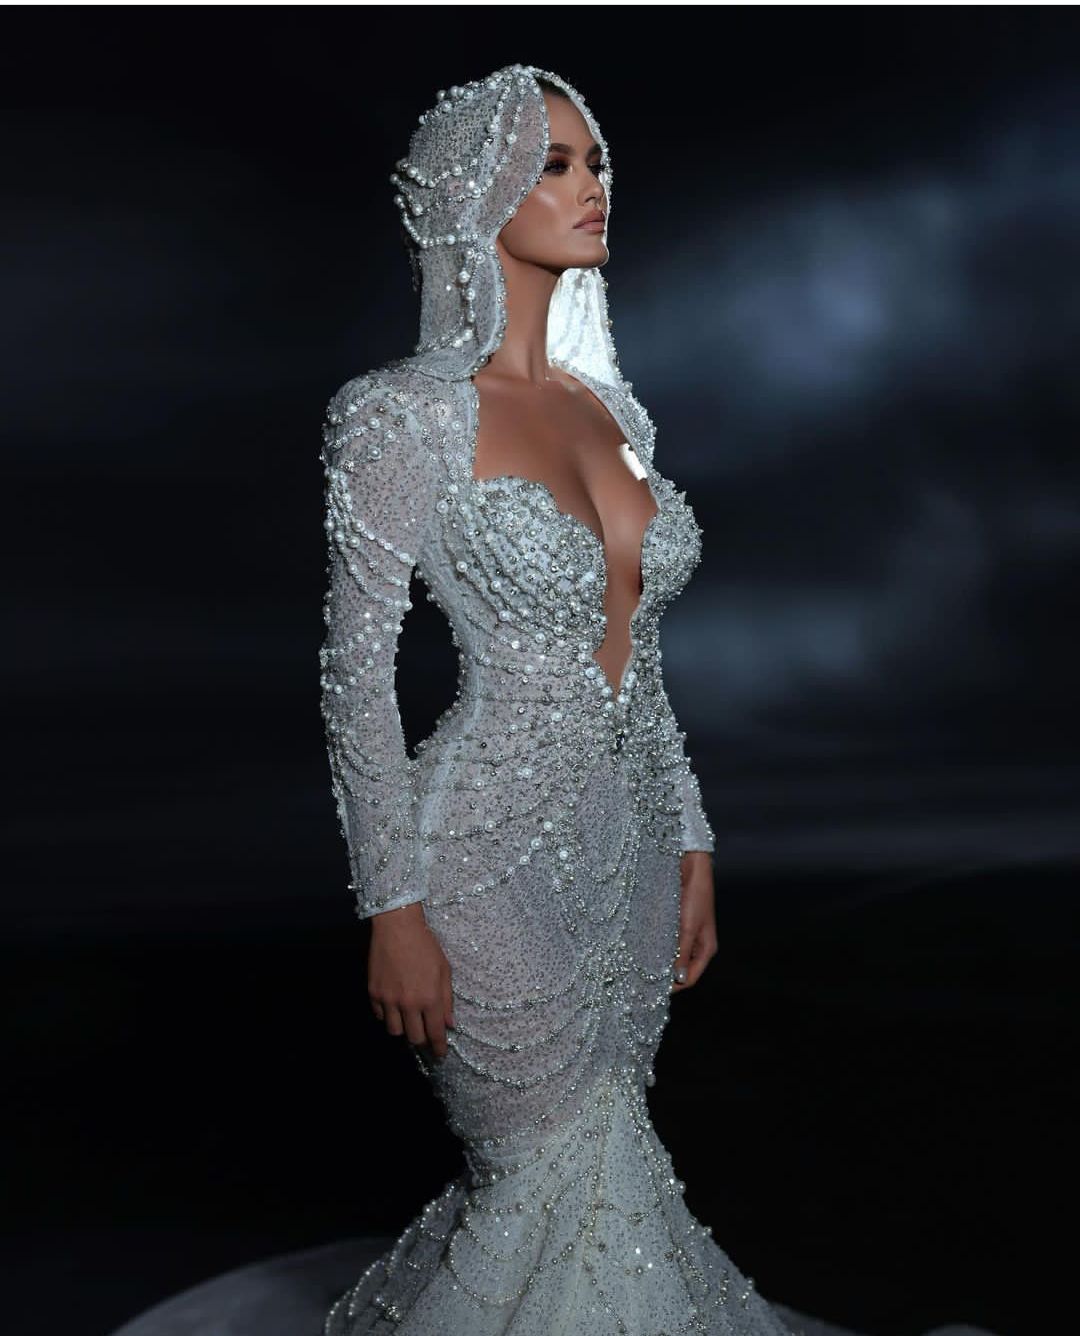 Exquisite Mermaid Wedding Dresses Long Sleeves V Neck Appliques Sequins Ruffles 3D Lace Trumpet Train Floor Length Pearls Hat Bridal Gowns Custom Made abiti da sposa